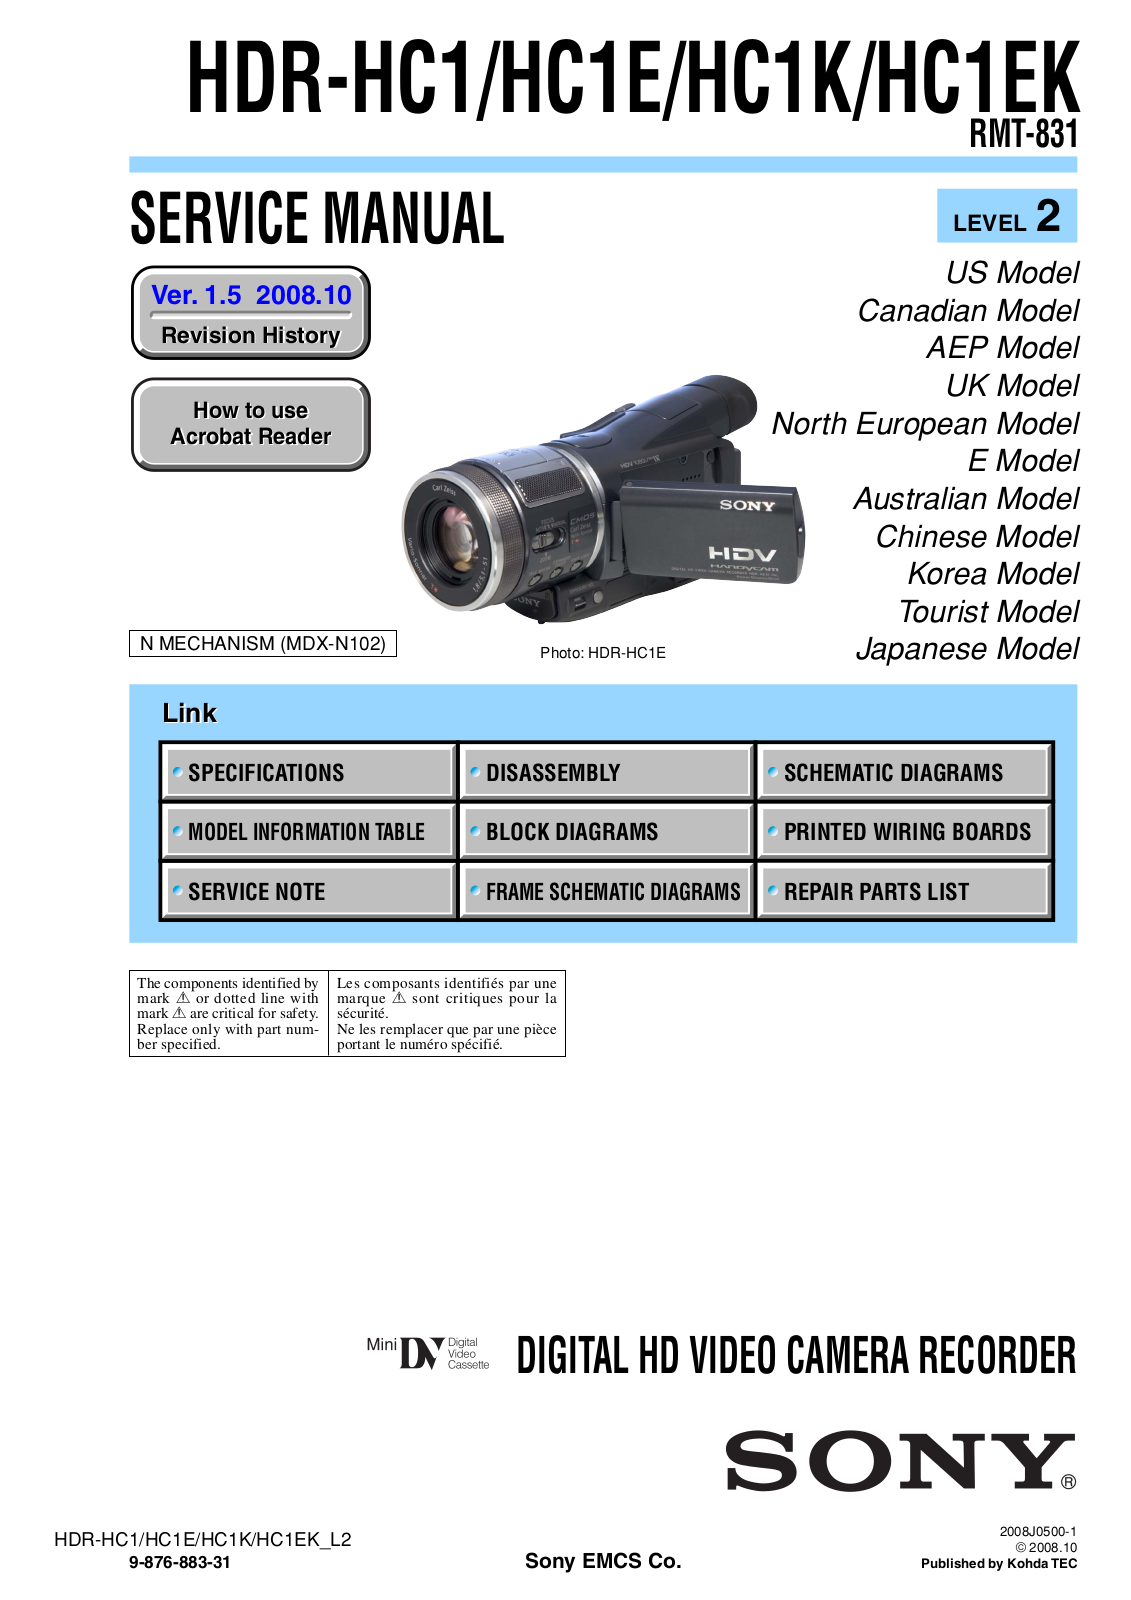 Sony HDR-HC1, HDR-HC1E, HDR-HC1K, HDR-HC1EK Service Manual